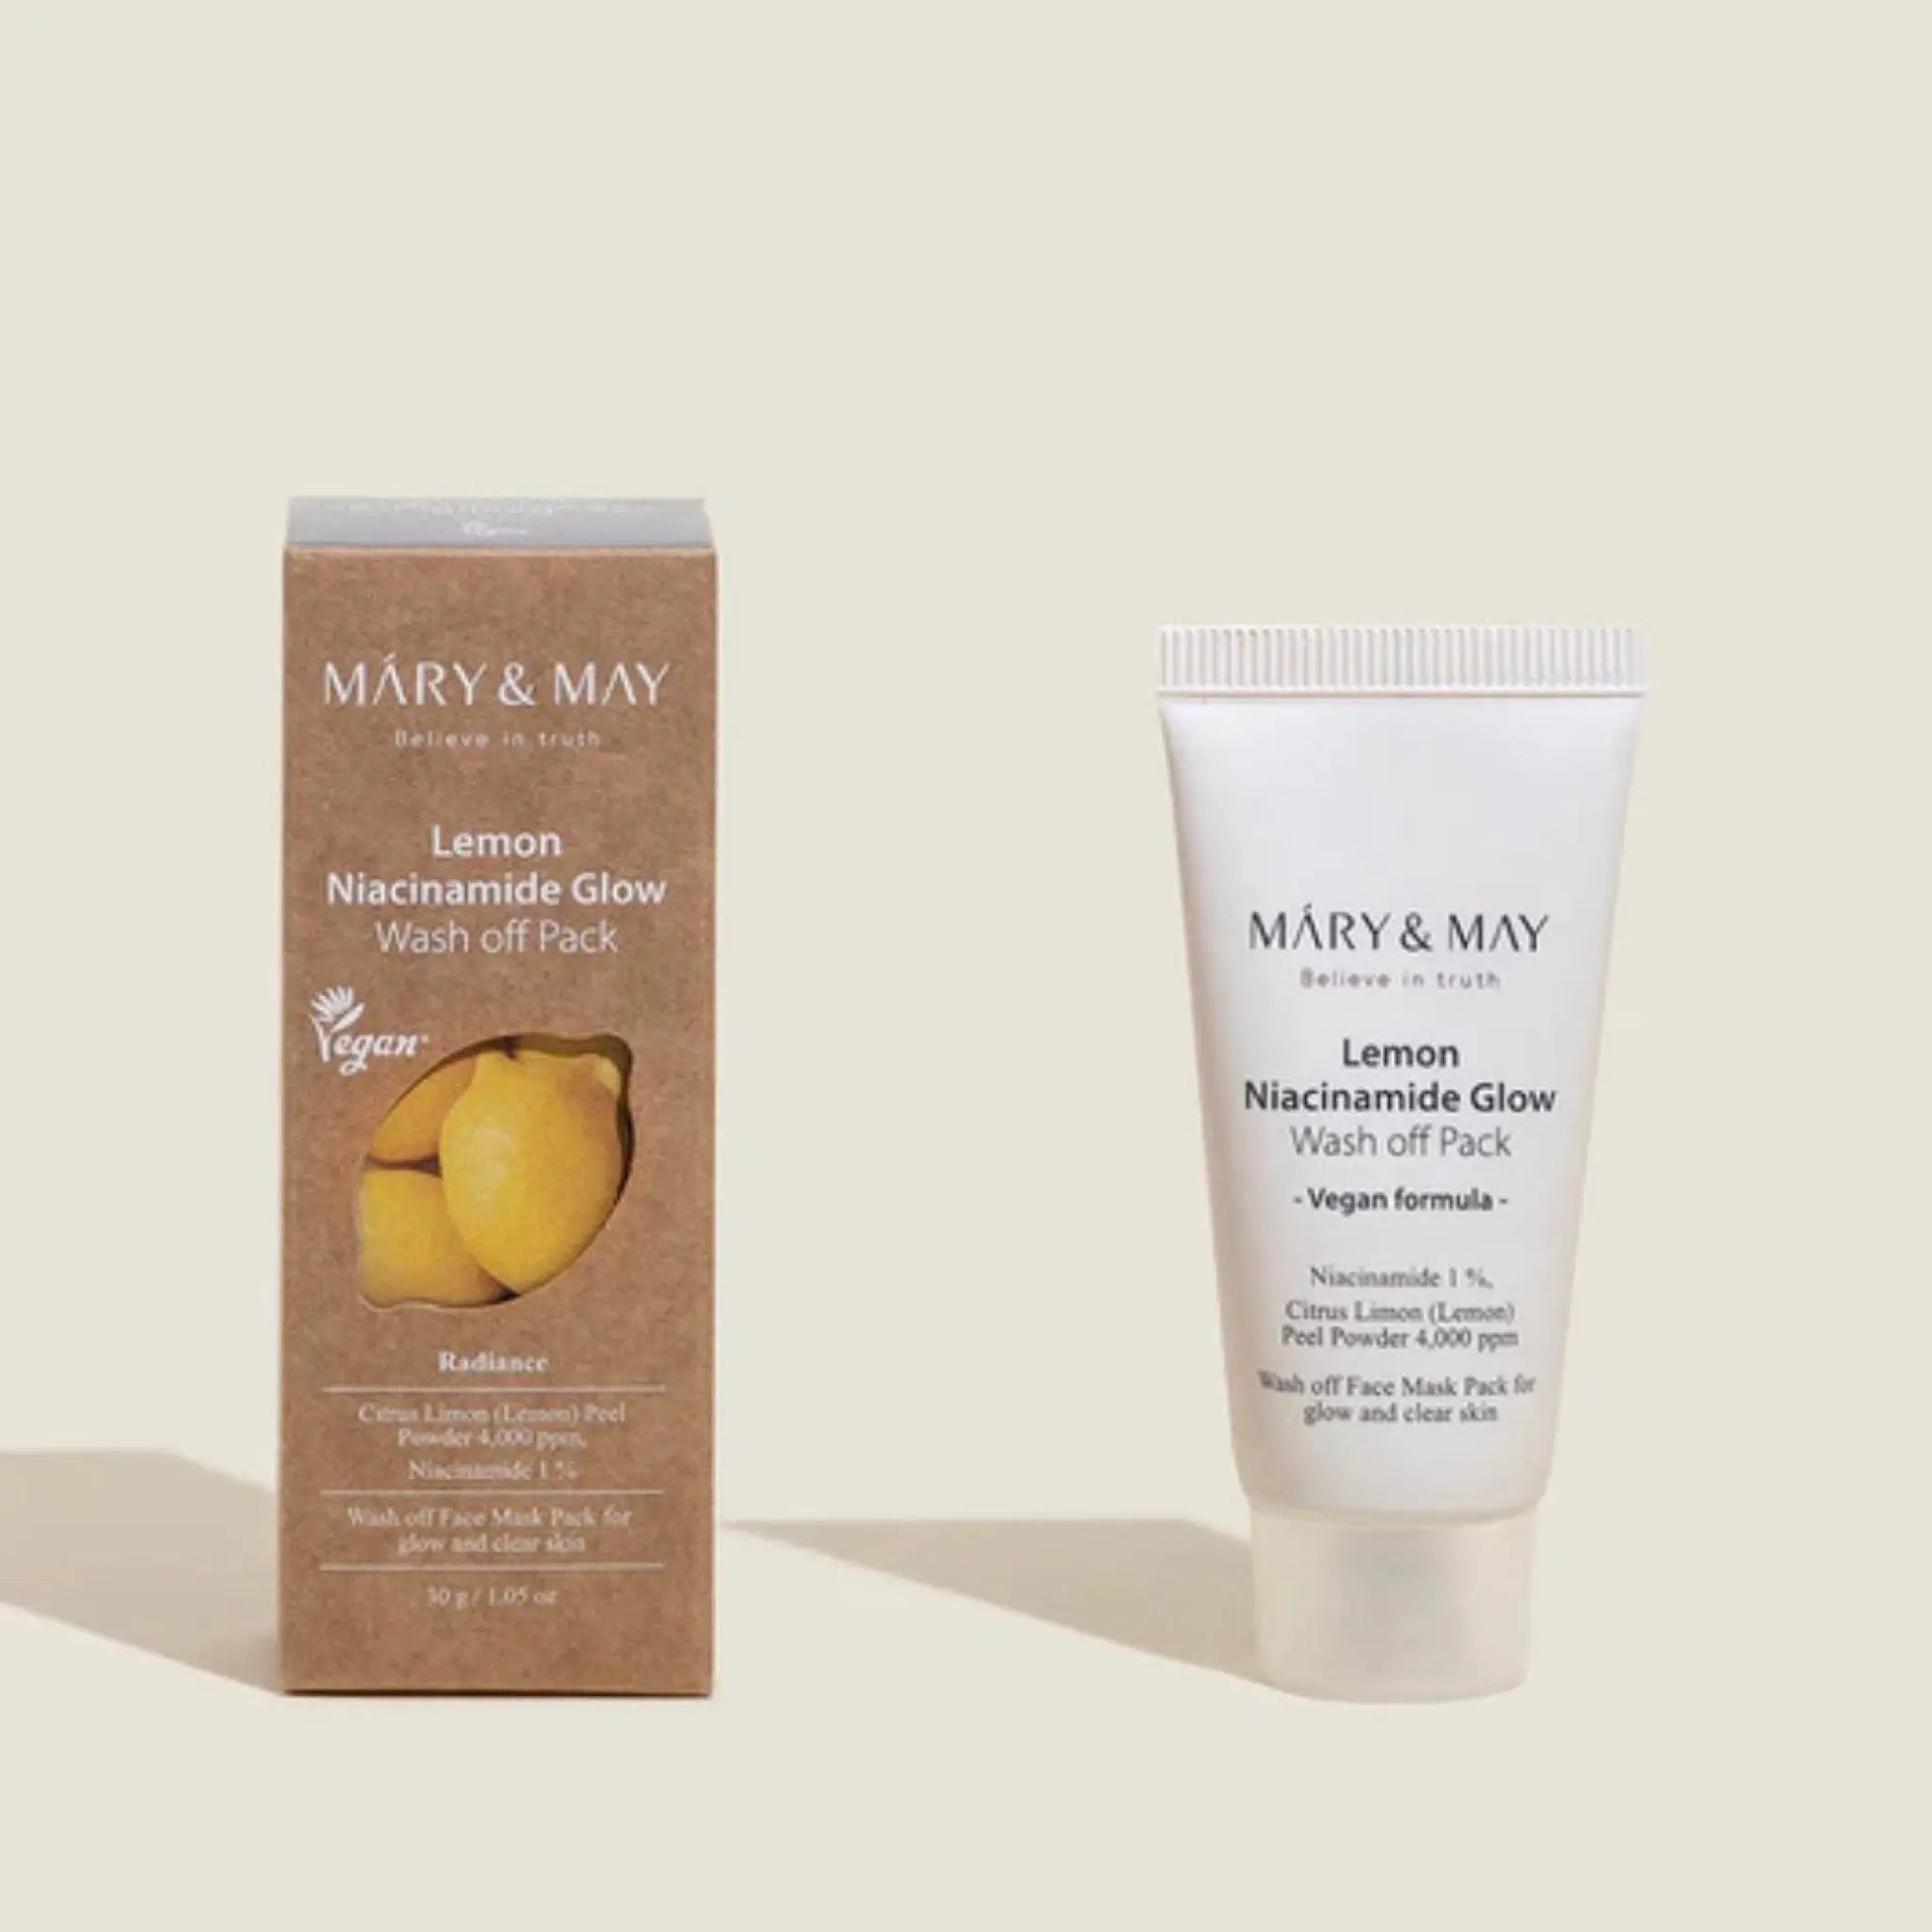 Mary & May - Lemon Niacinamide Glow Wash off Pack 30g Mary & May